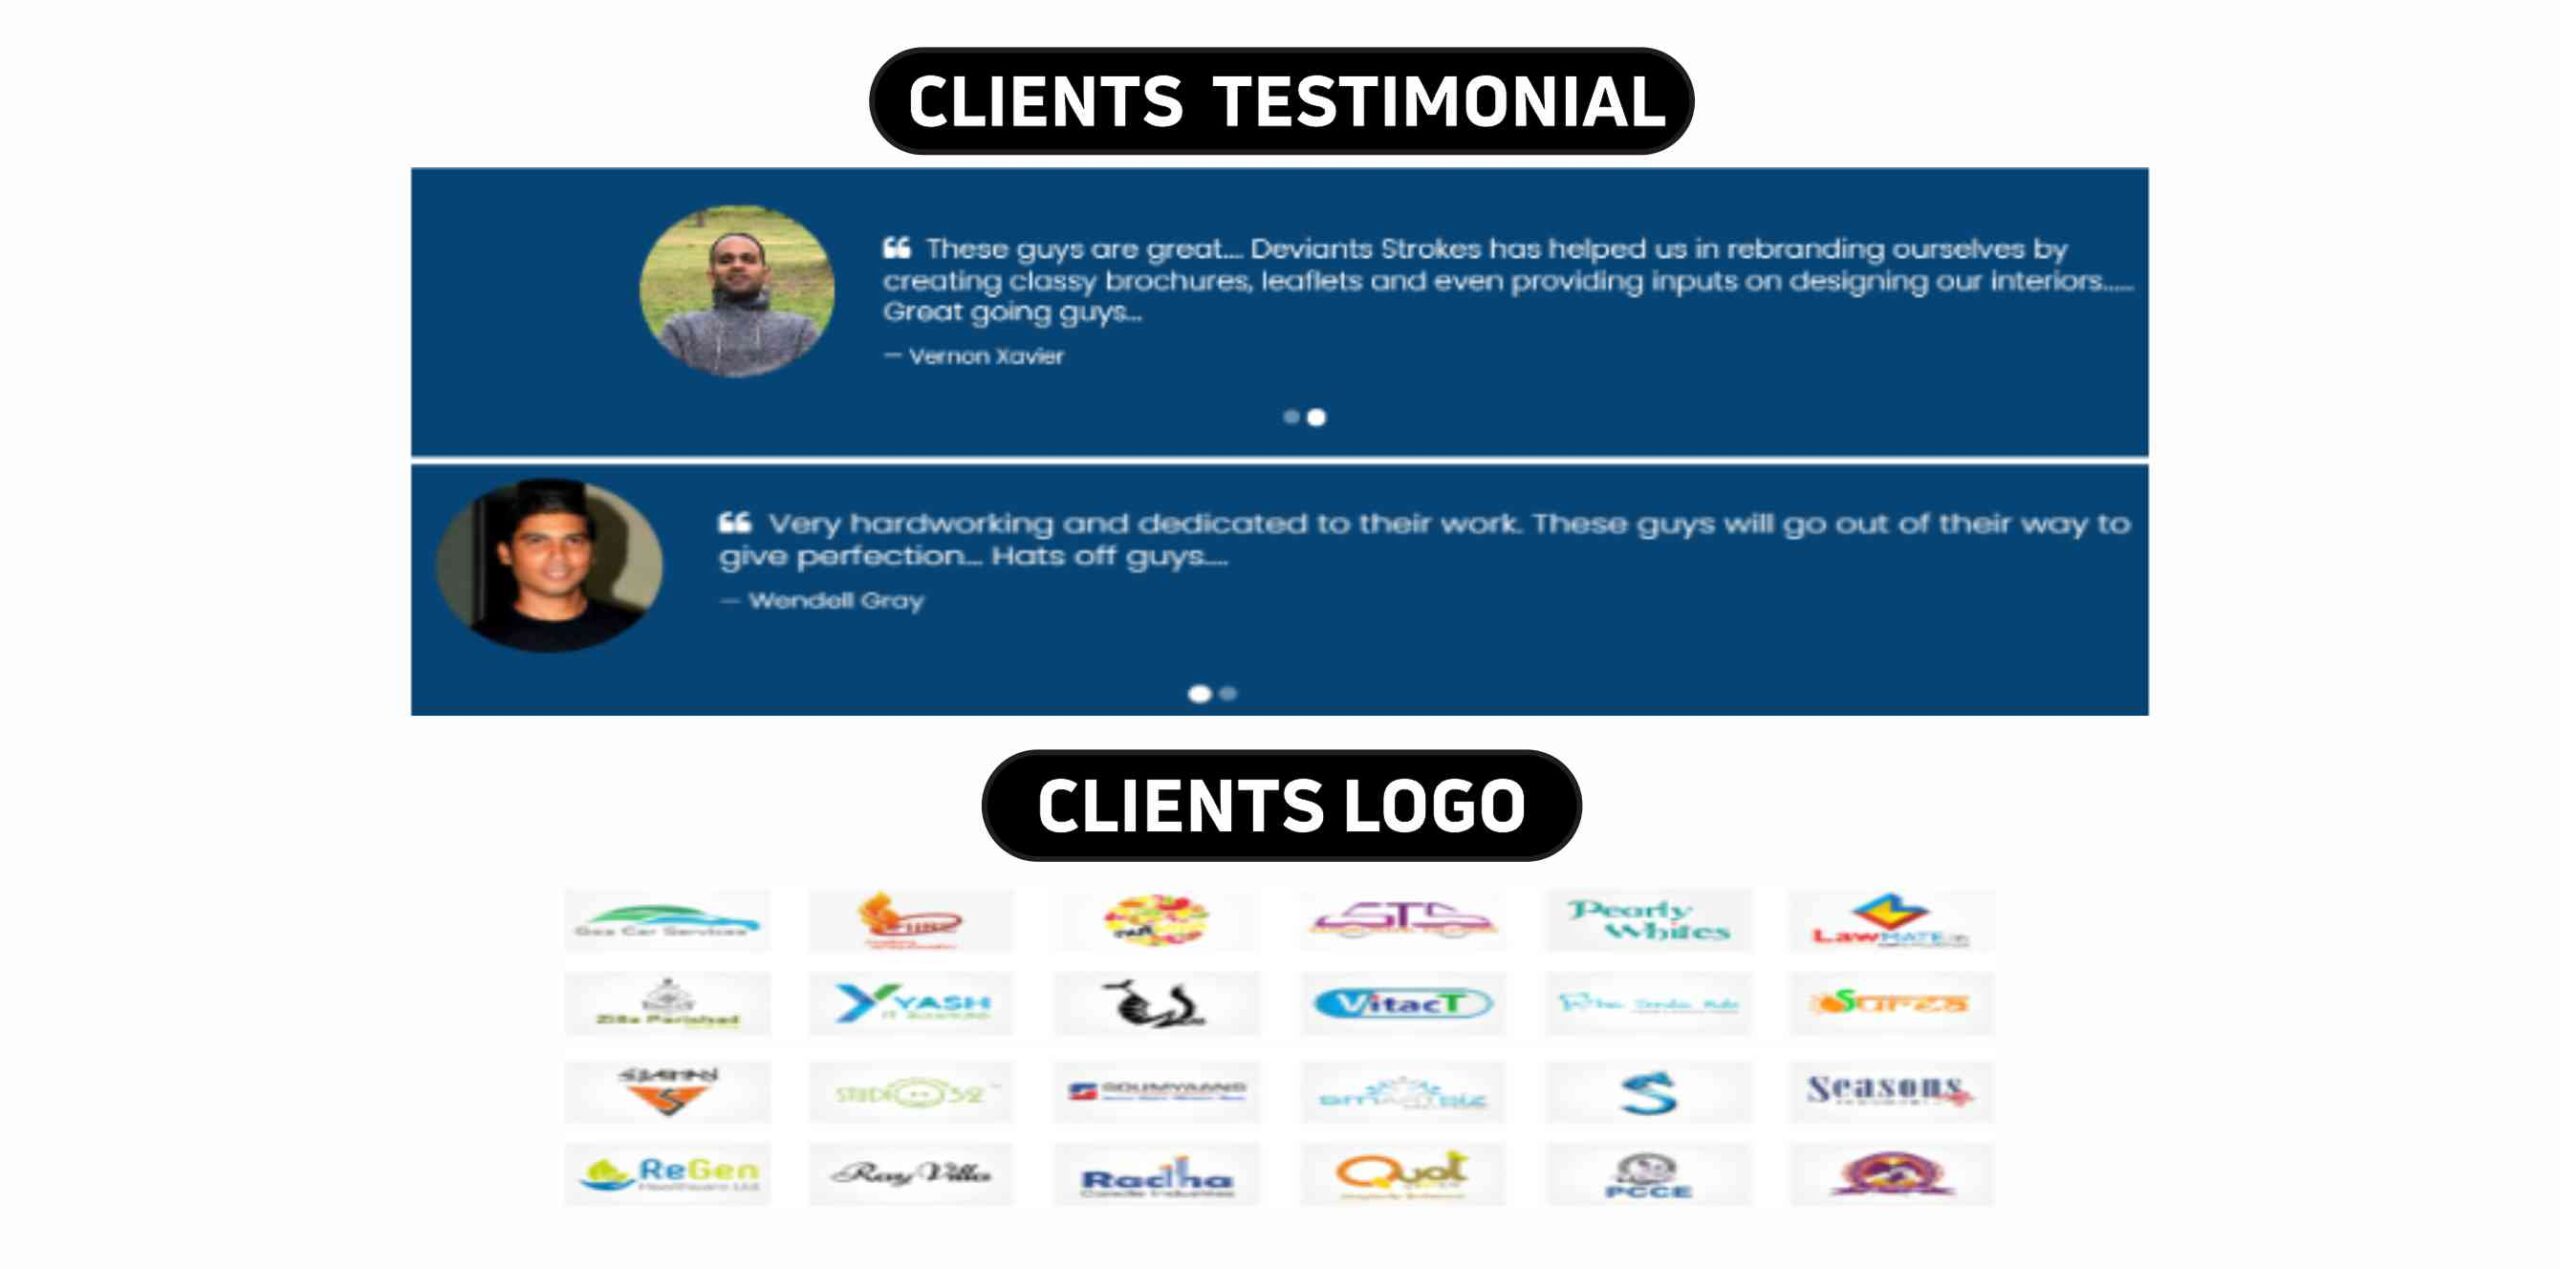 Deviant Strokes Client Testimonials & logos 